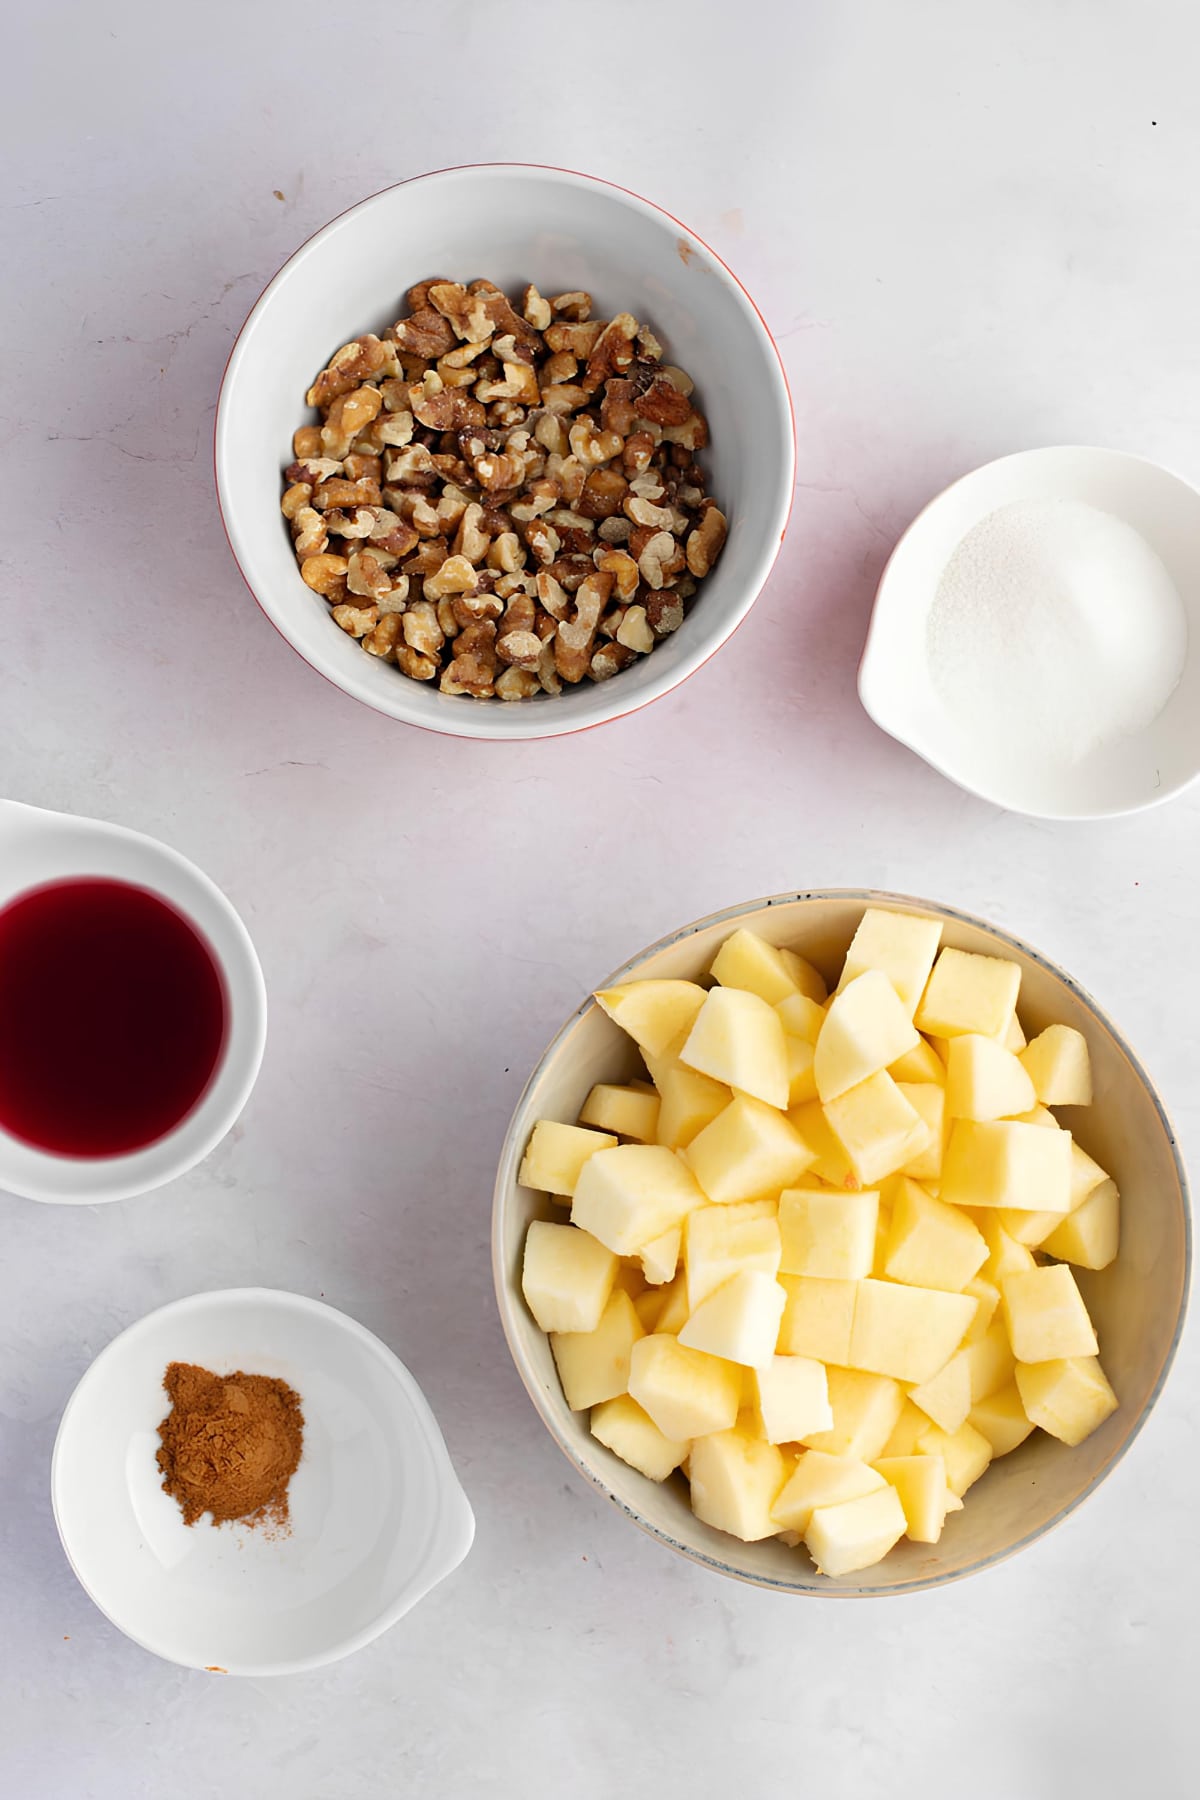 Charoset Ingredients - Apples, Walnuts, Sugar, Cinnamon and Red Wine